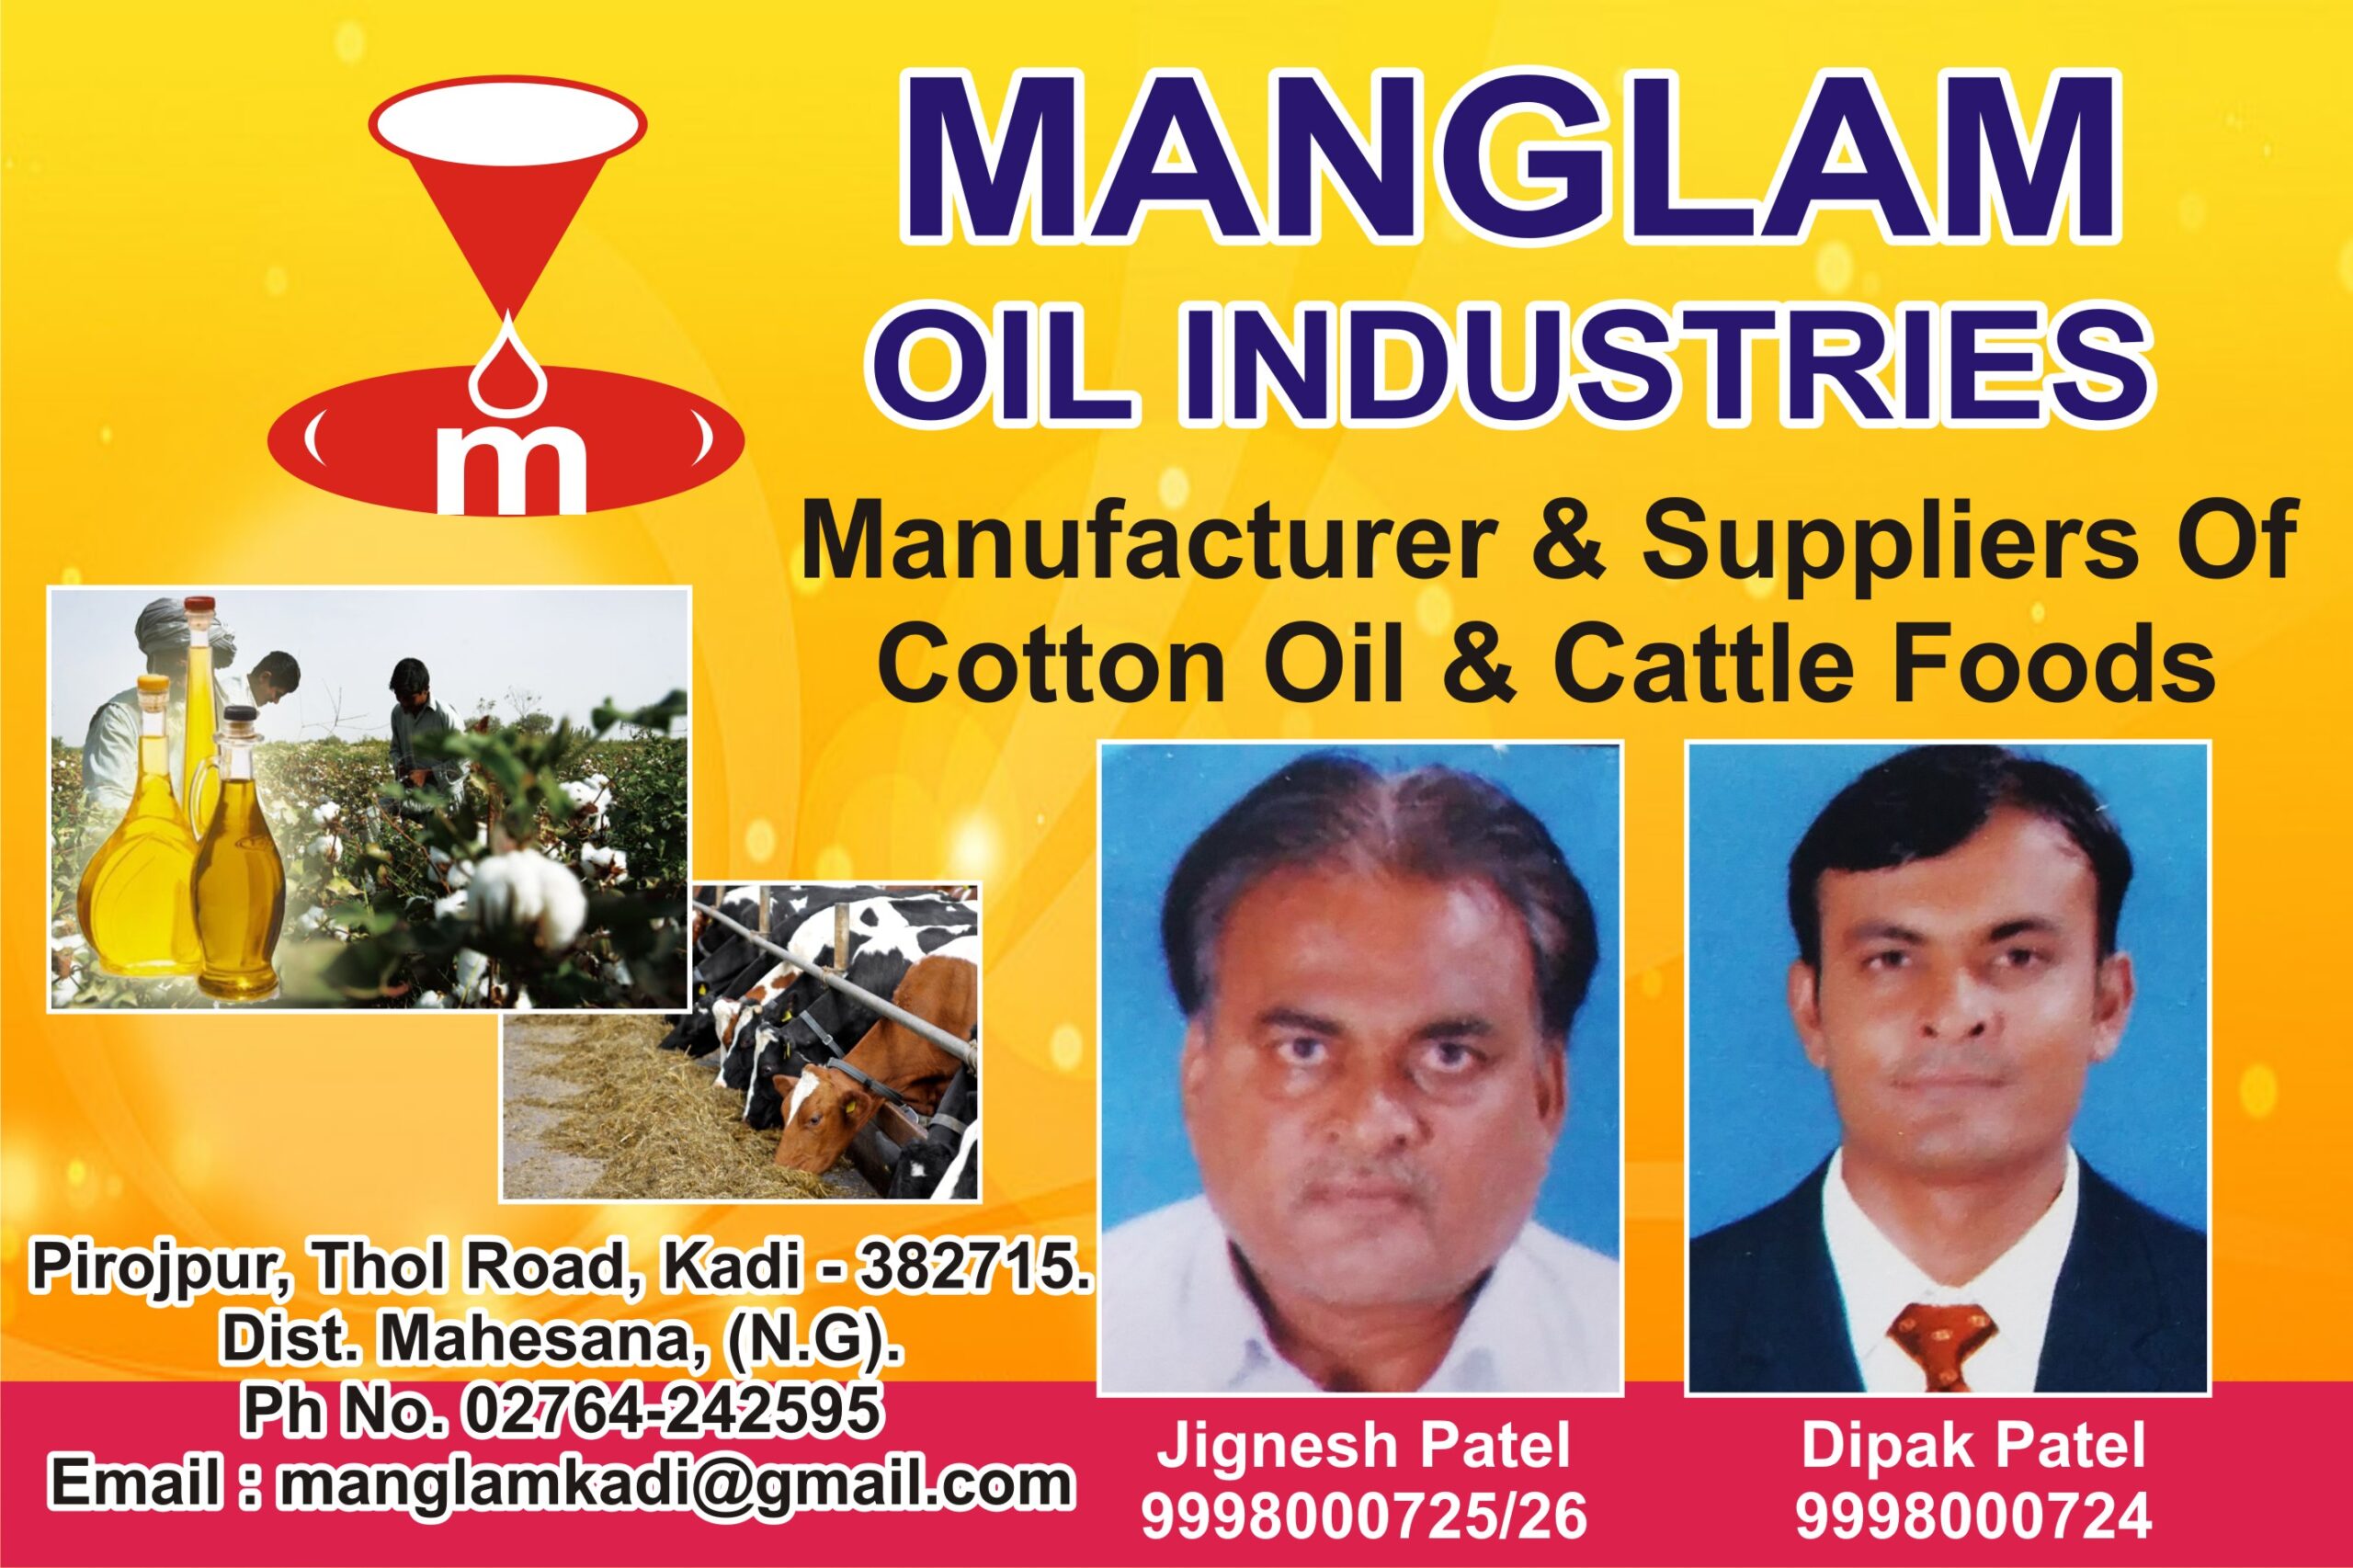 Manglam Oil Industries